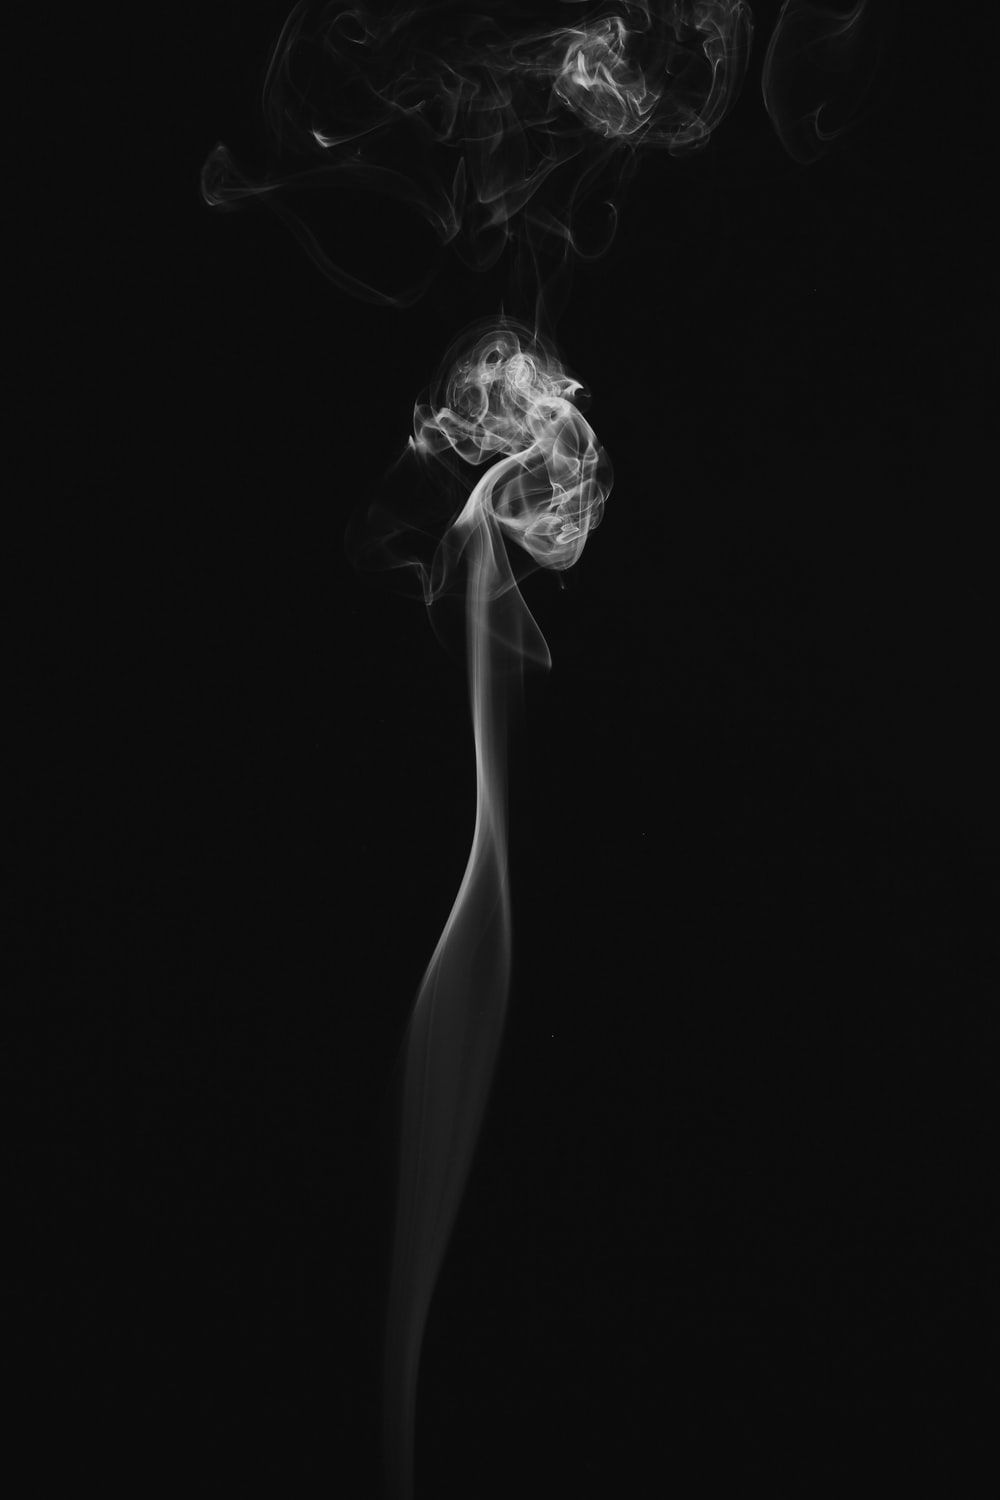 Black Smoke Picture [HD]. Download Free Image & Stock